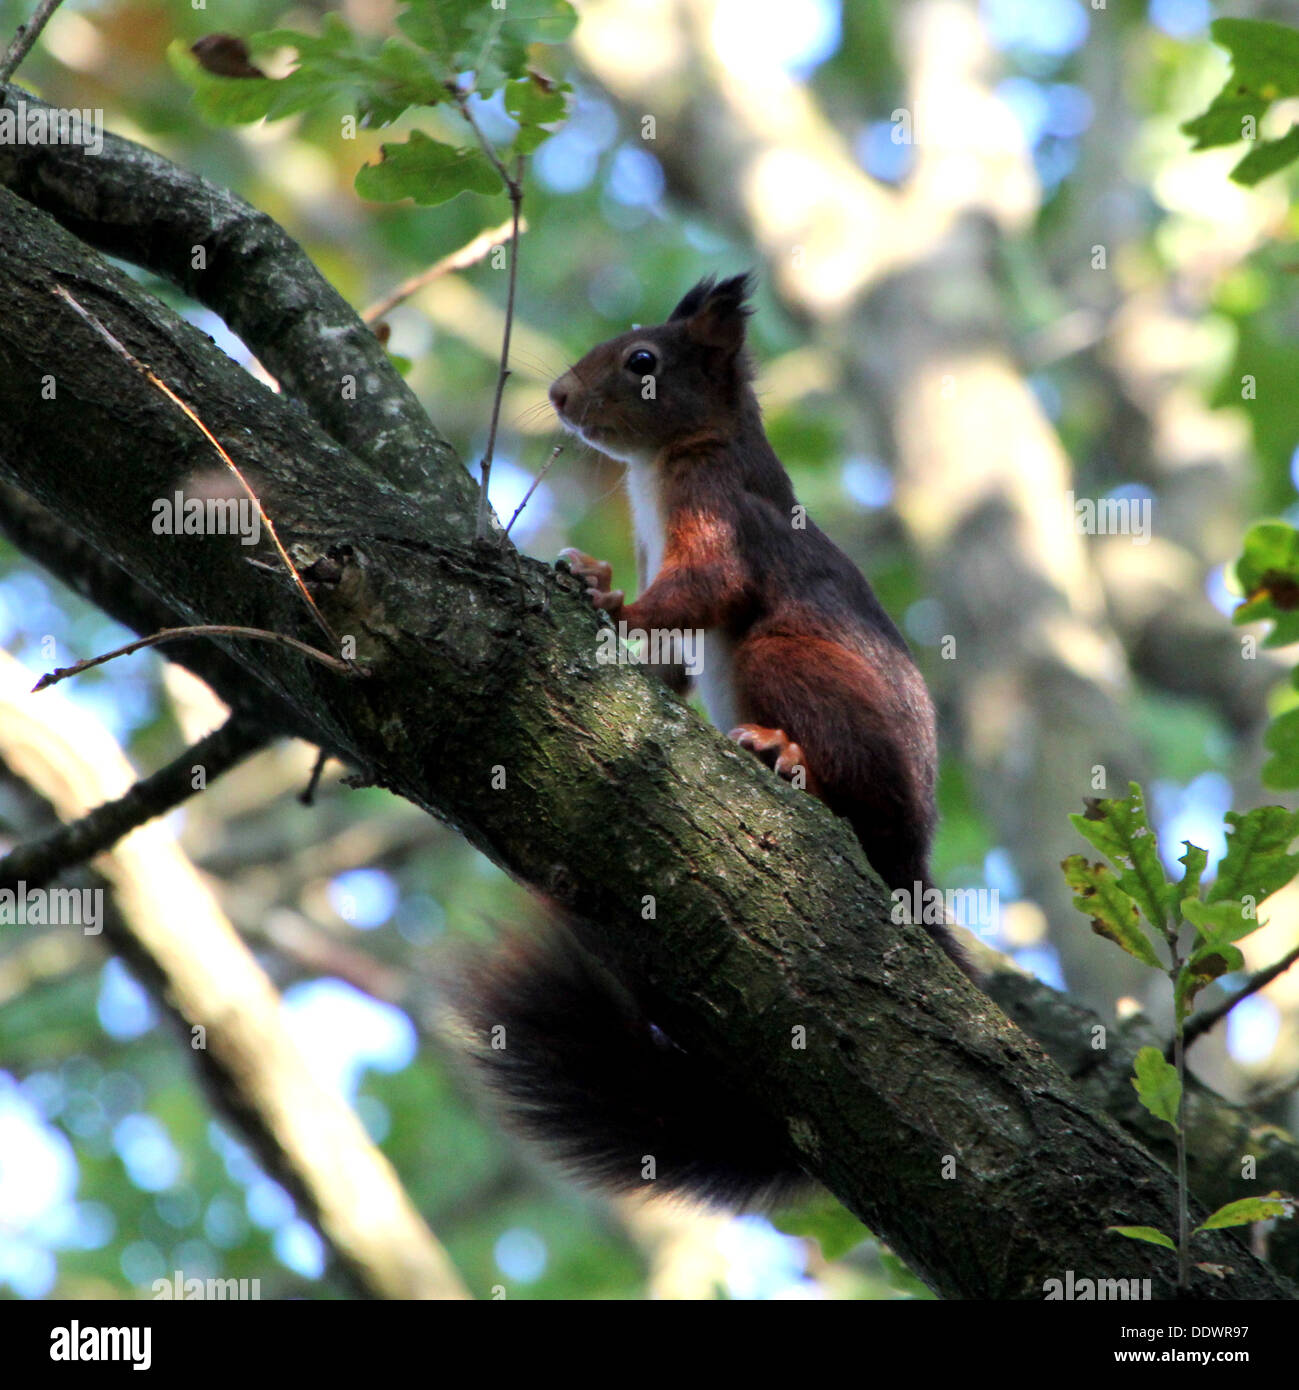 European Red squirrel (Sciurus vulgaris) up in a tree in various poses (series of 24 images) Stock Photo